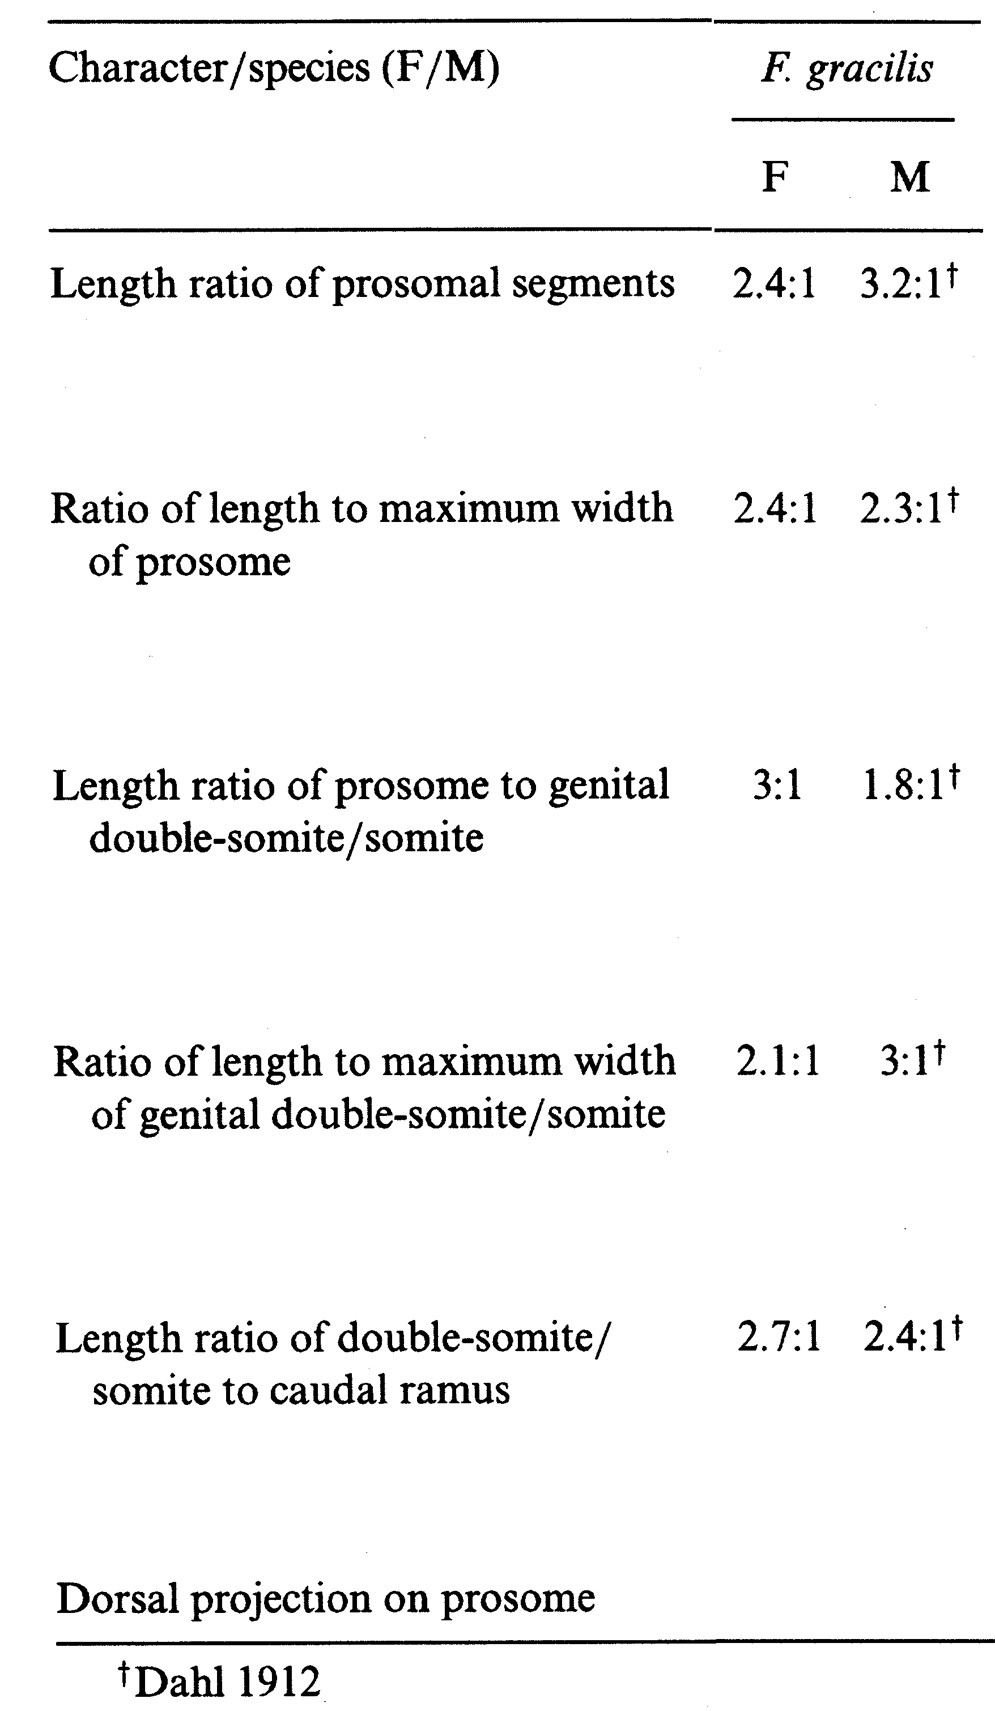 Espce Farranula gracilis - Planche 12 de figures morphologiques